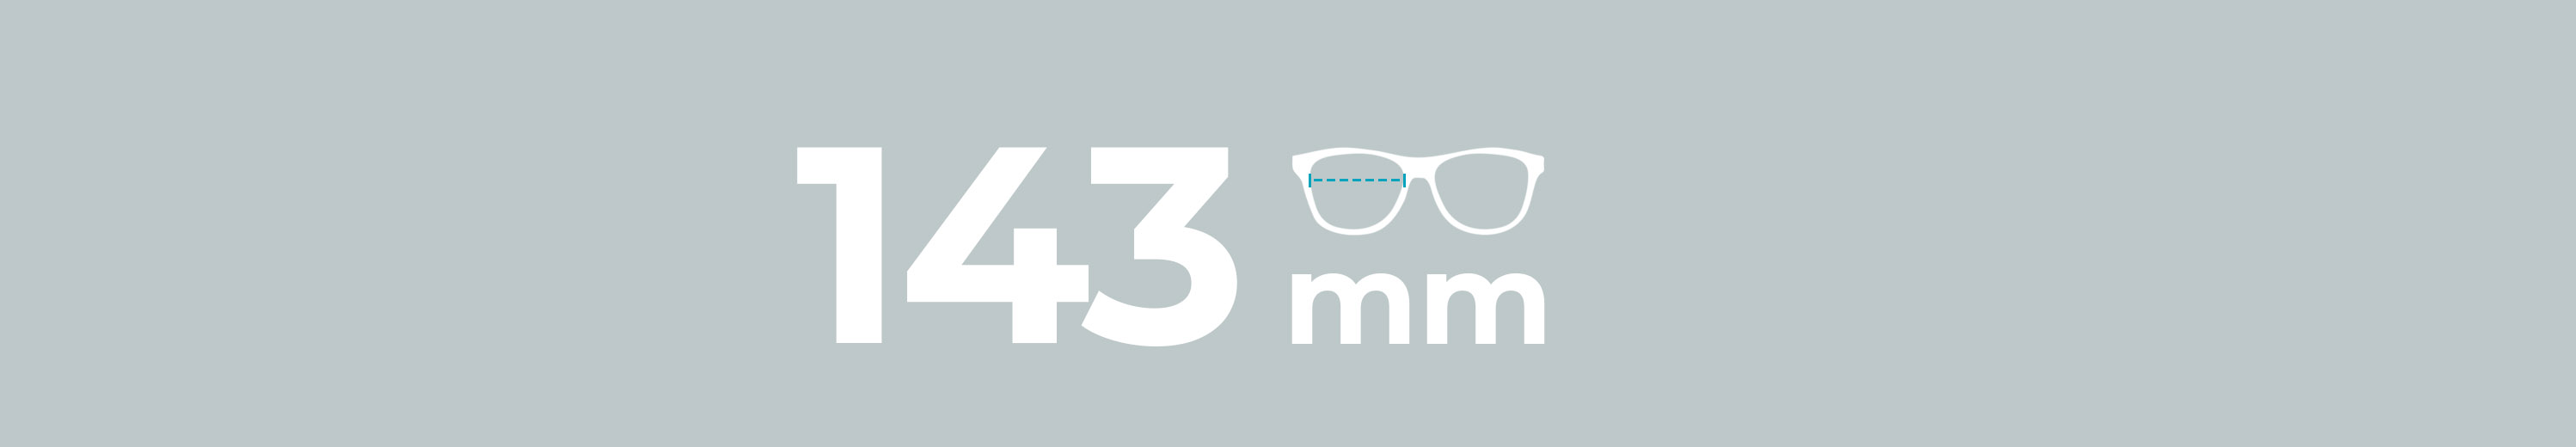 Lens Size: 143mm Glasses